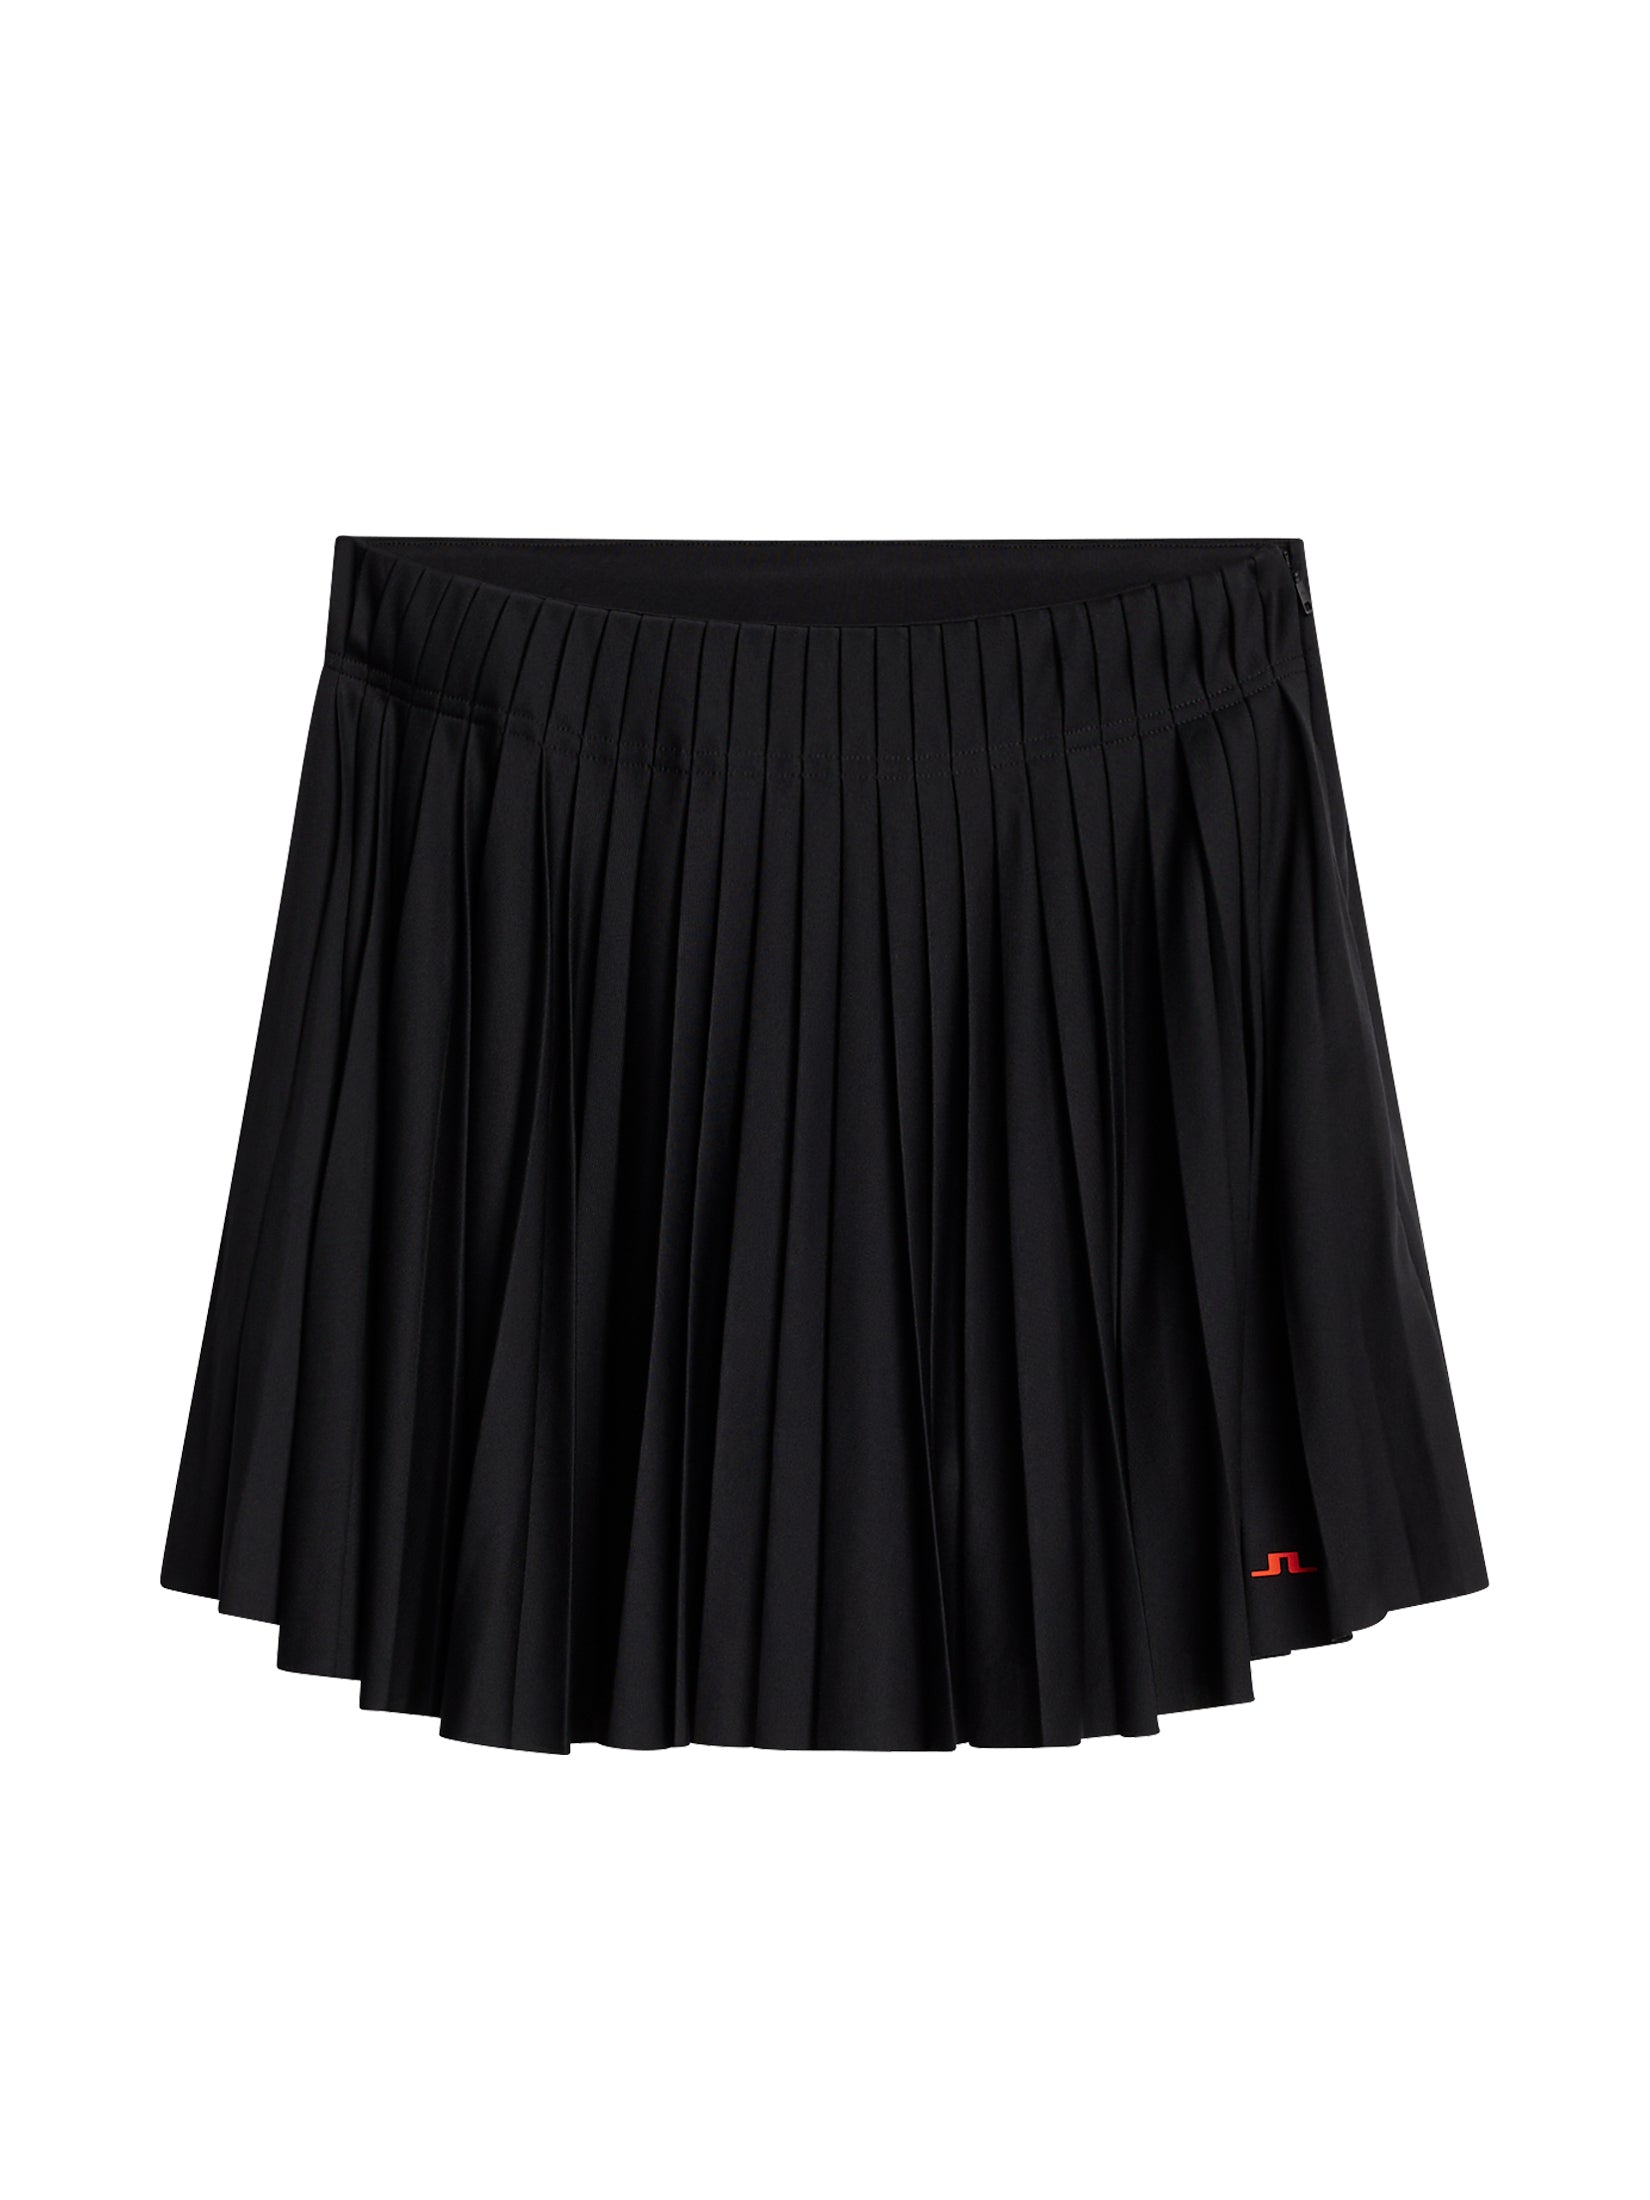 Gayle Skirt